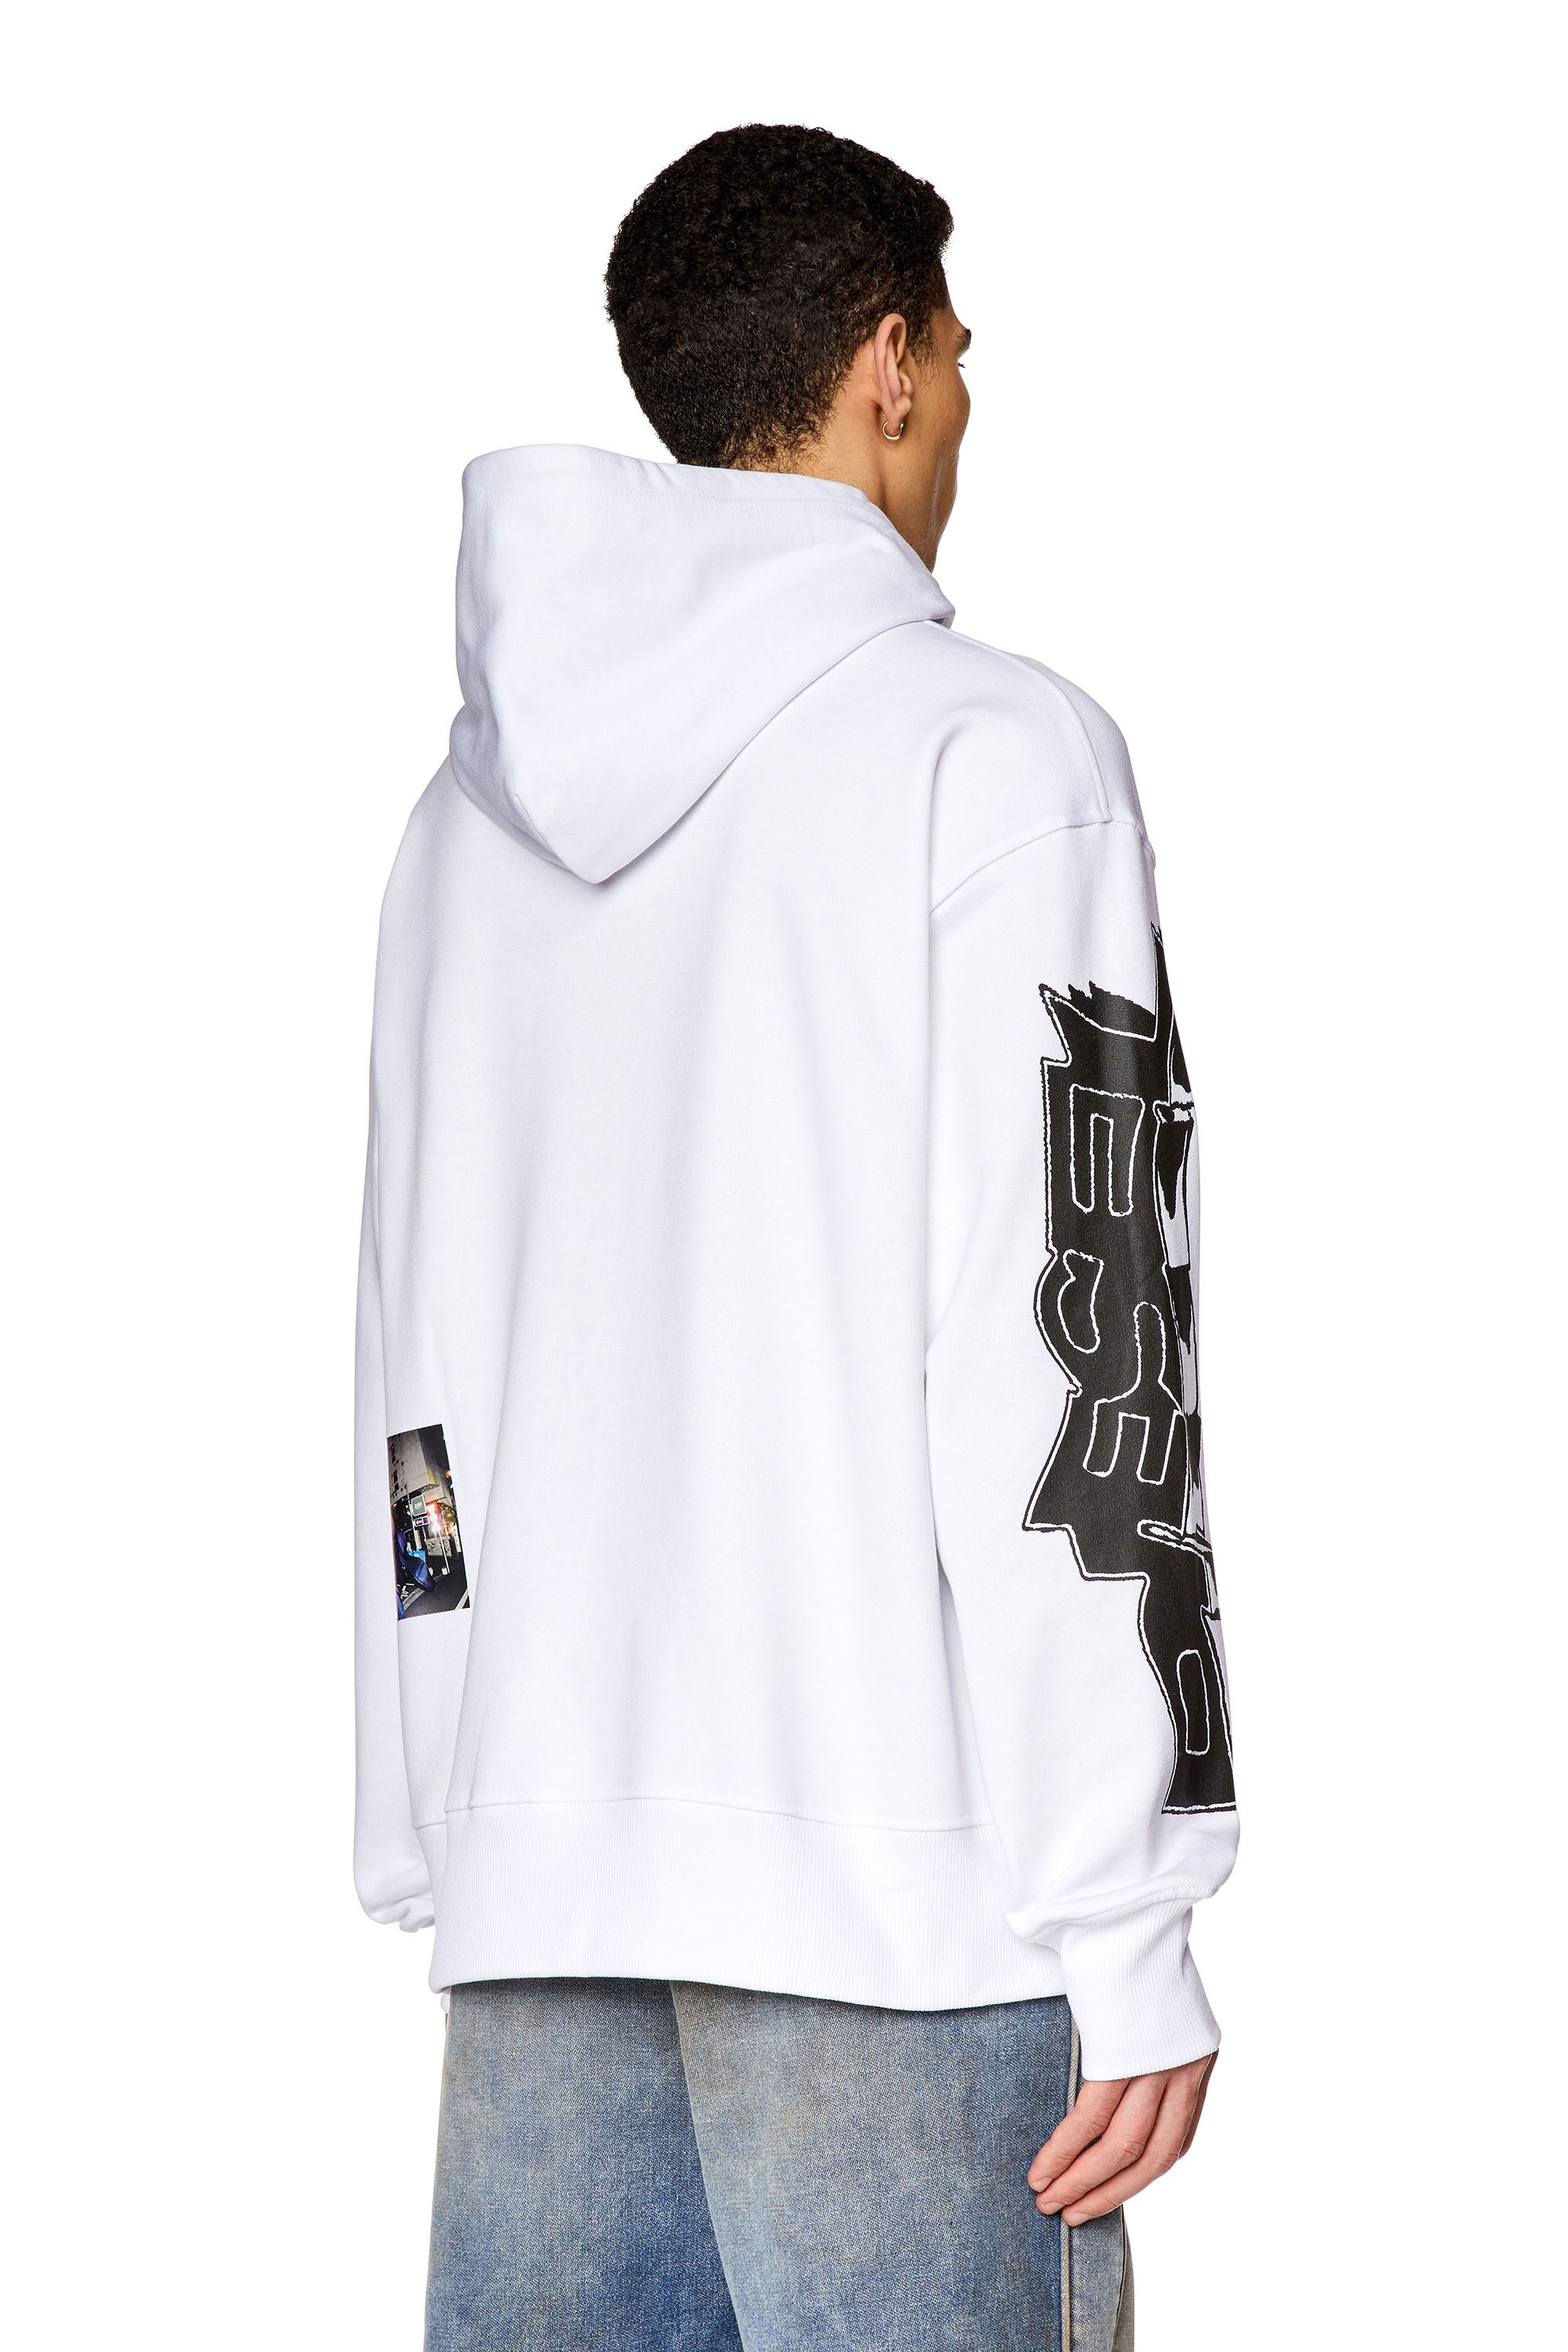 Men's Sweatshirts Sale: Hooded, zippered, logo, prints